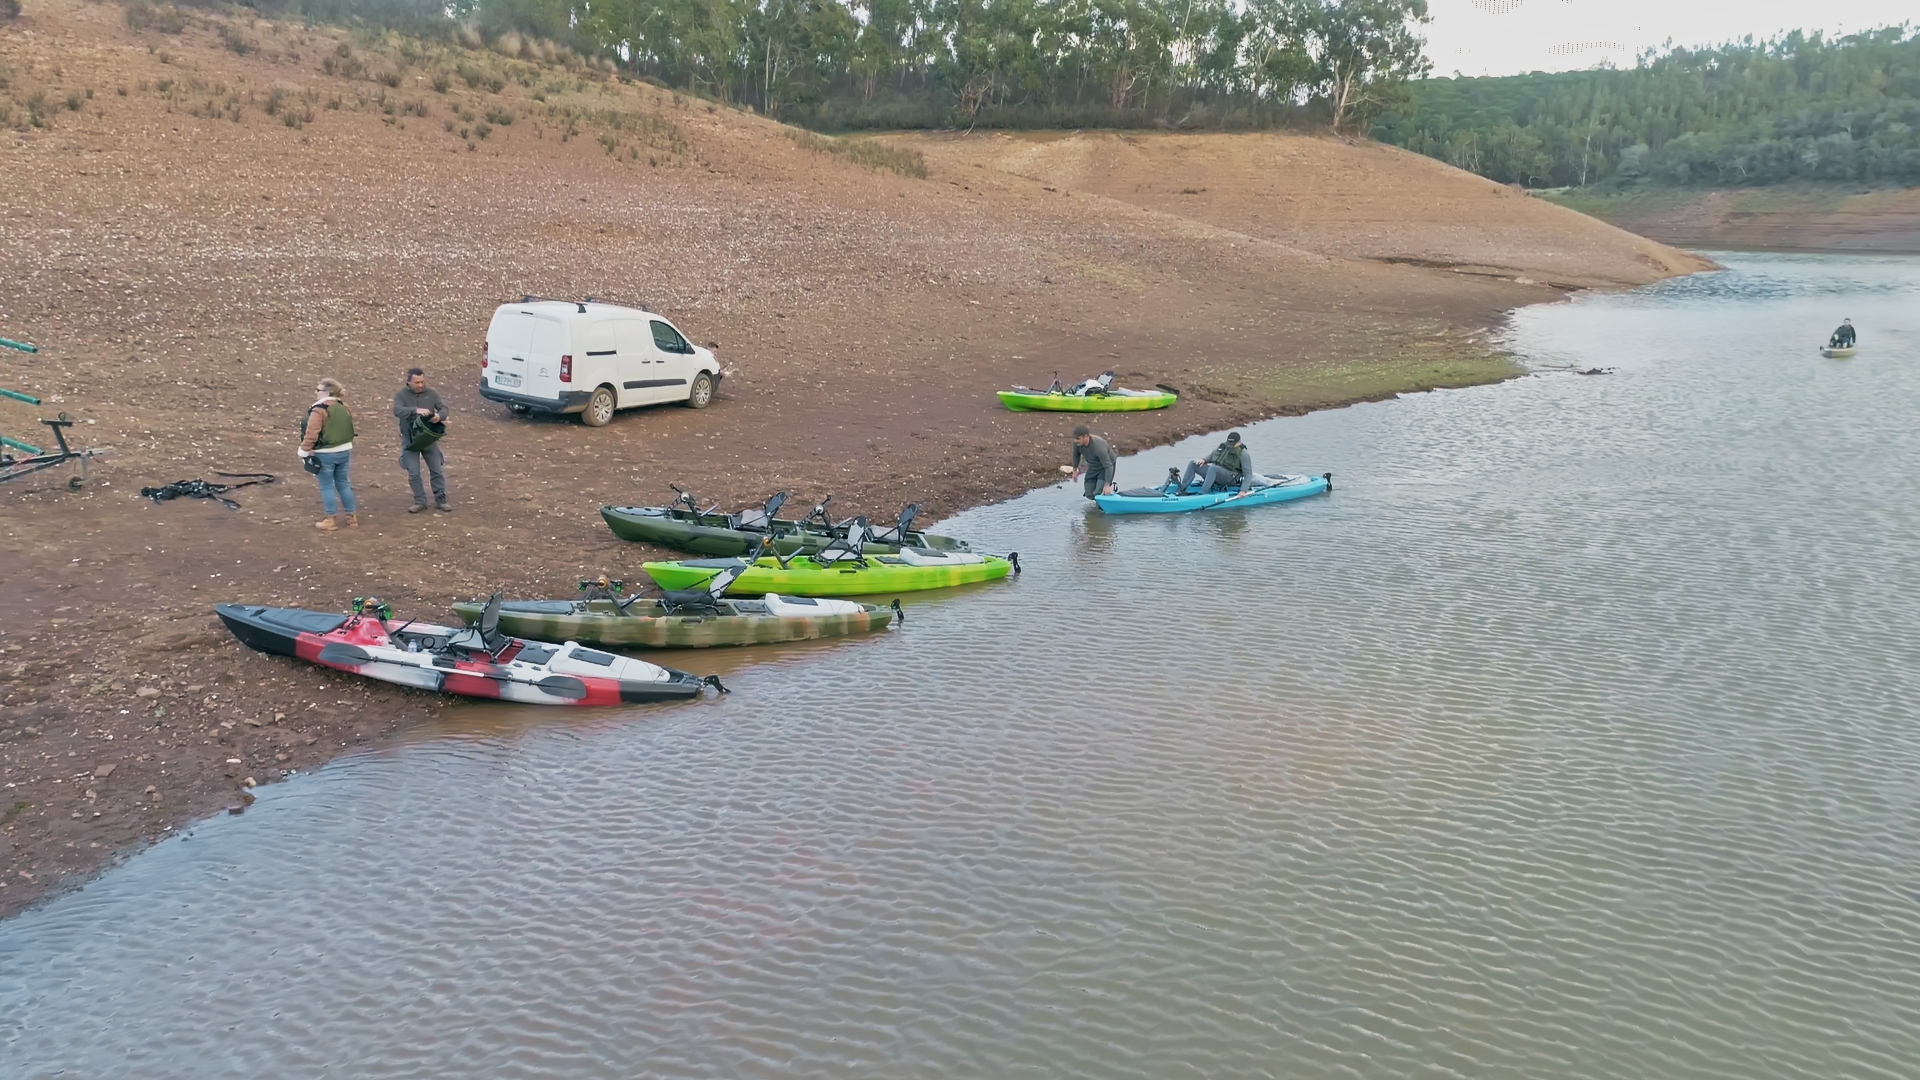 Kayak Tour at Barragem da Bravura